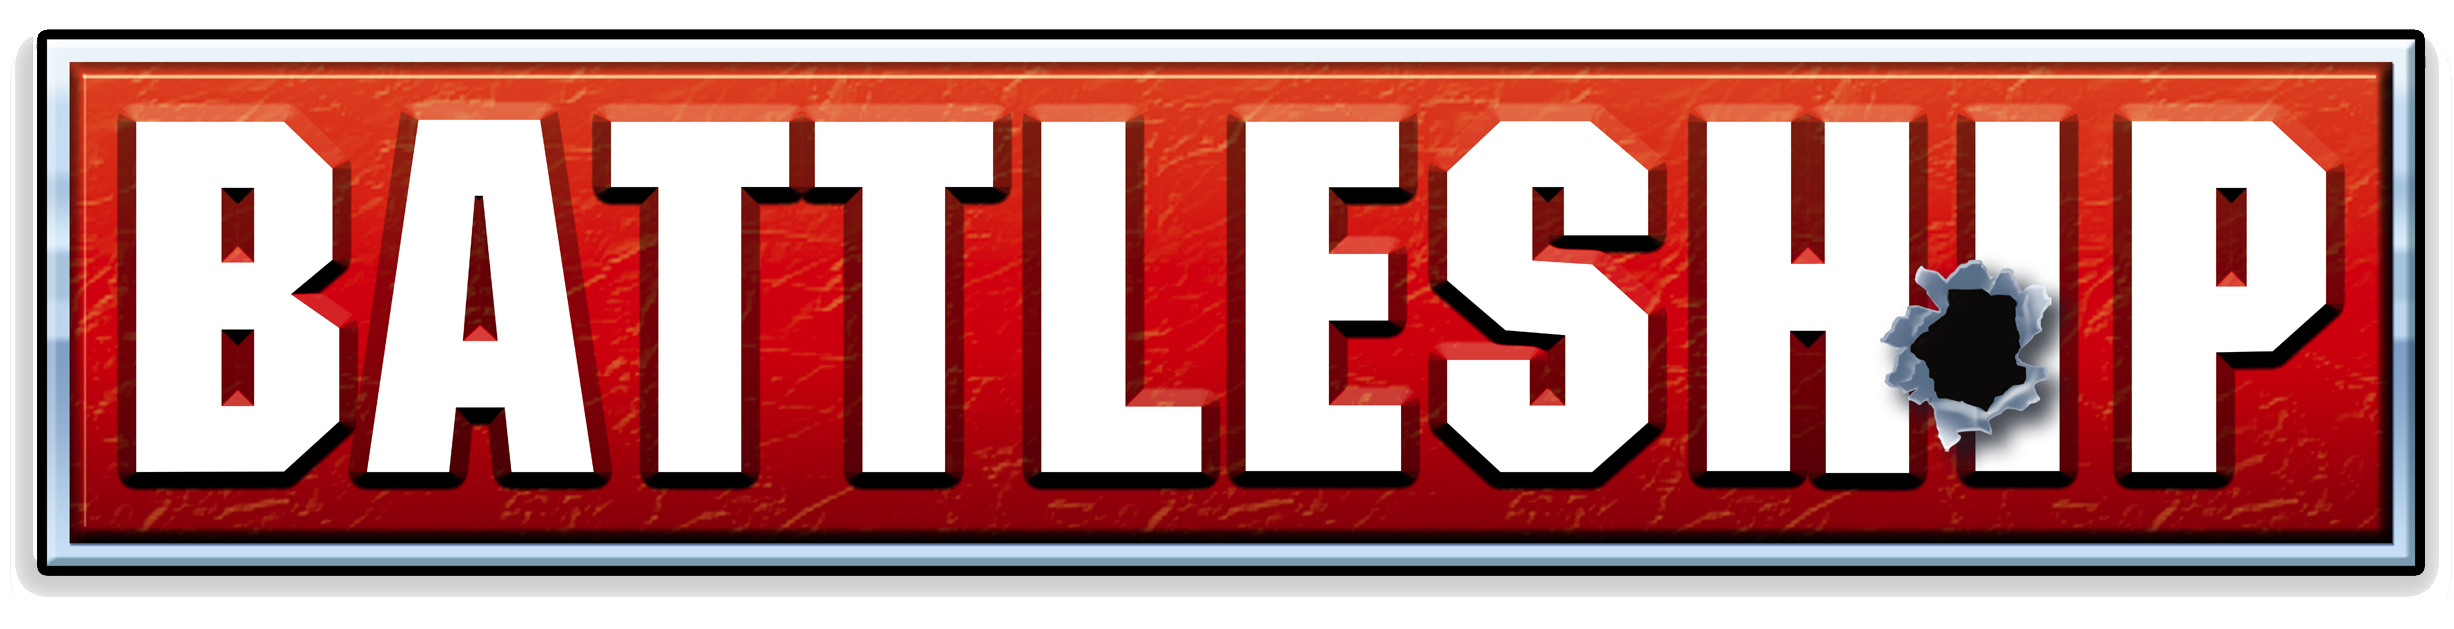 battleship logo